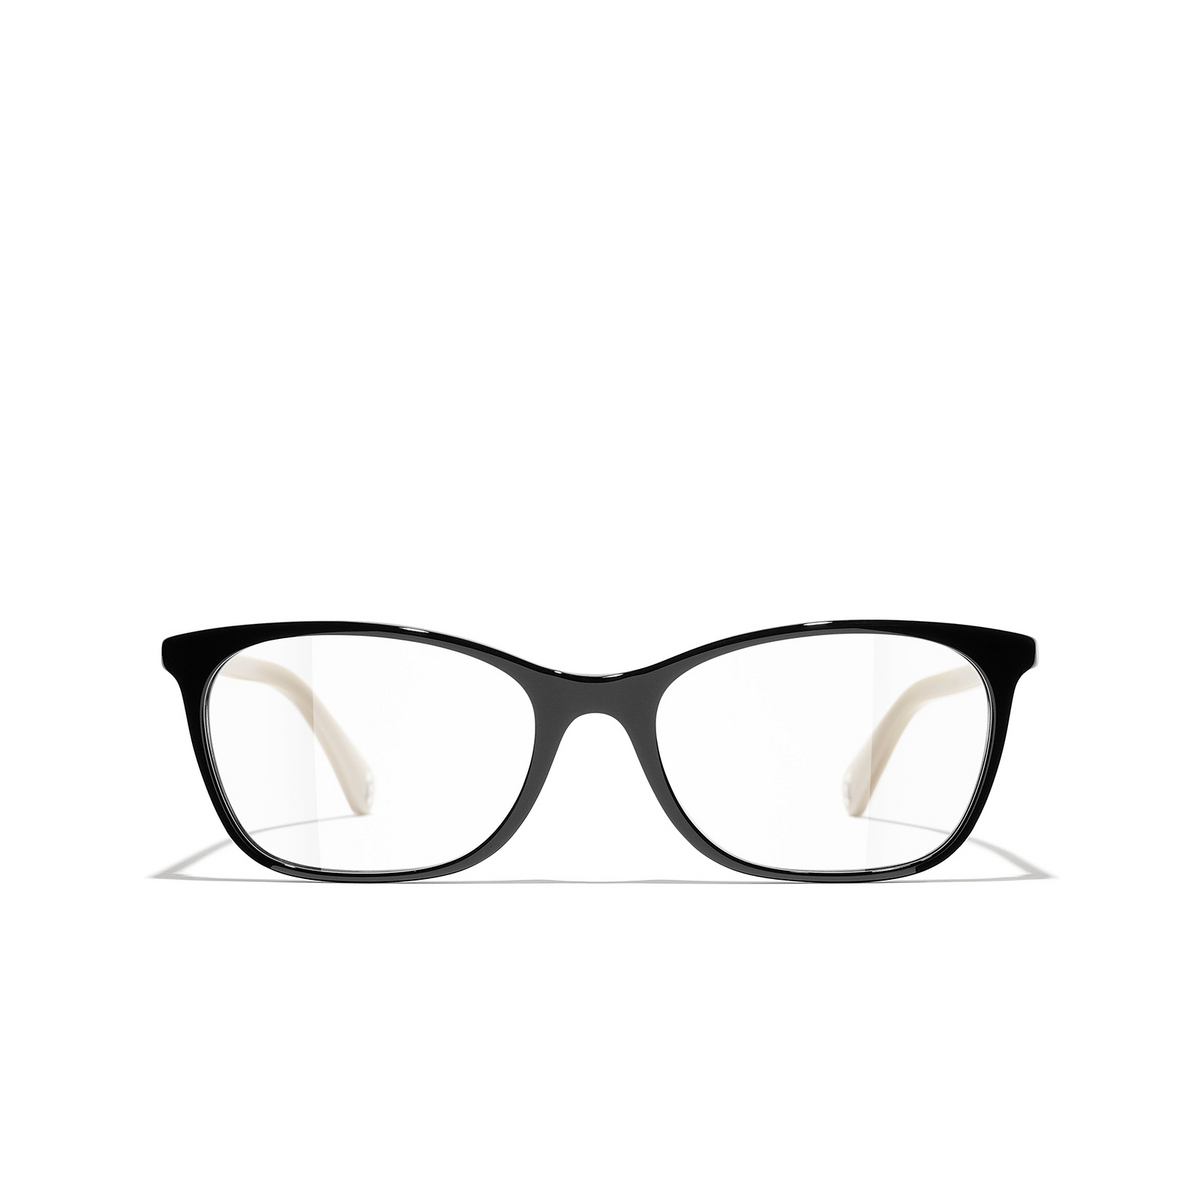 CHANEL rectangle Eyeglasses C942 Black & Beige - front view